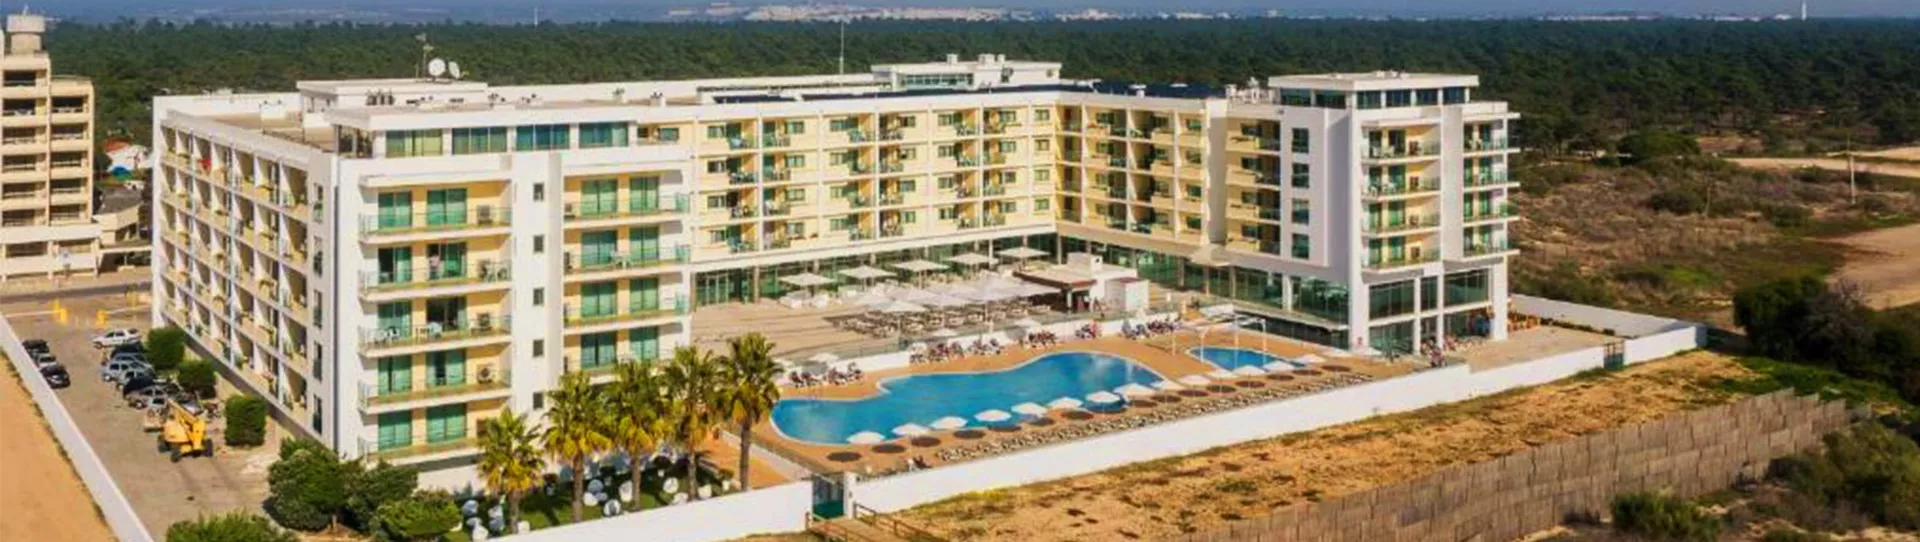 Portugal golf holidays - Hotel Apartamento Dunamar - Photo 1